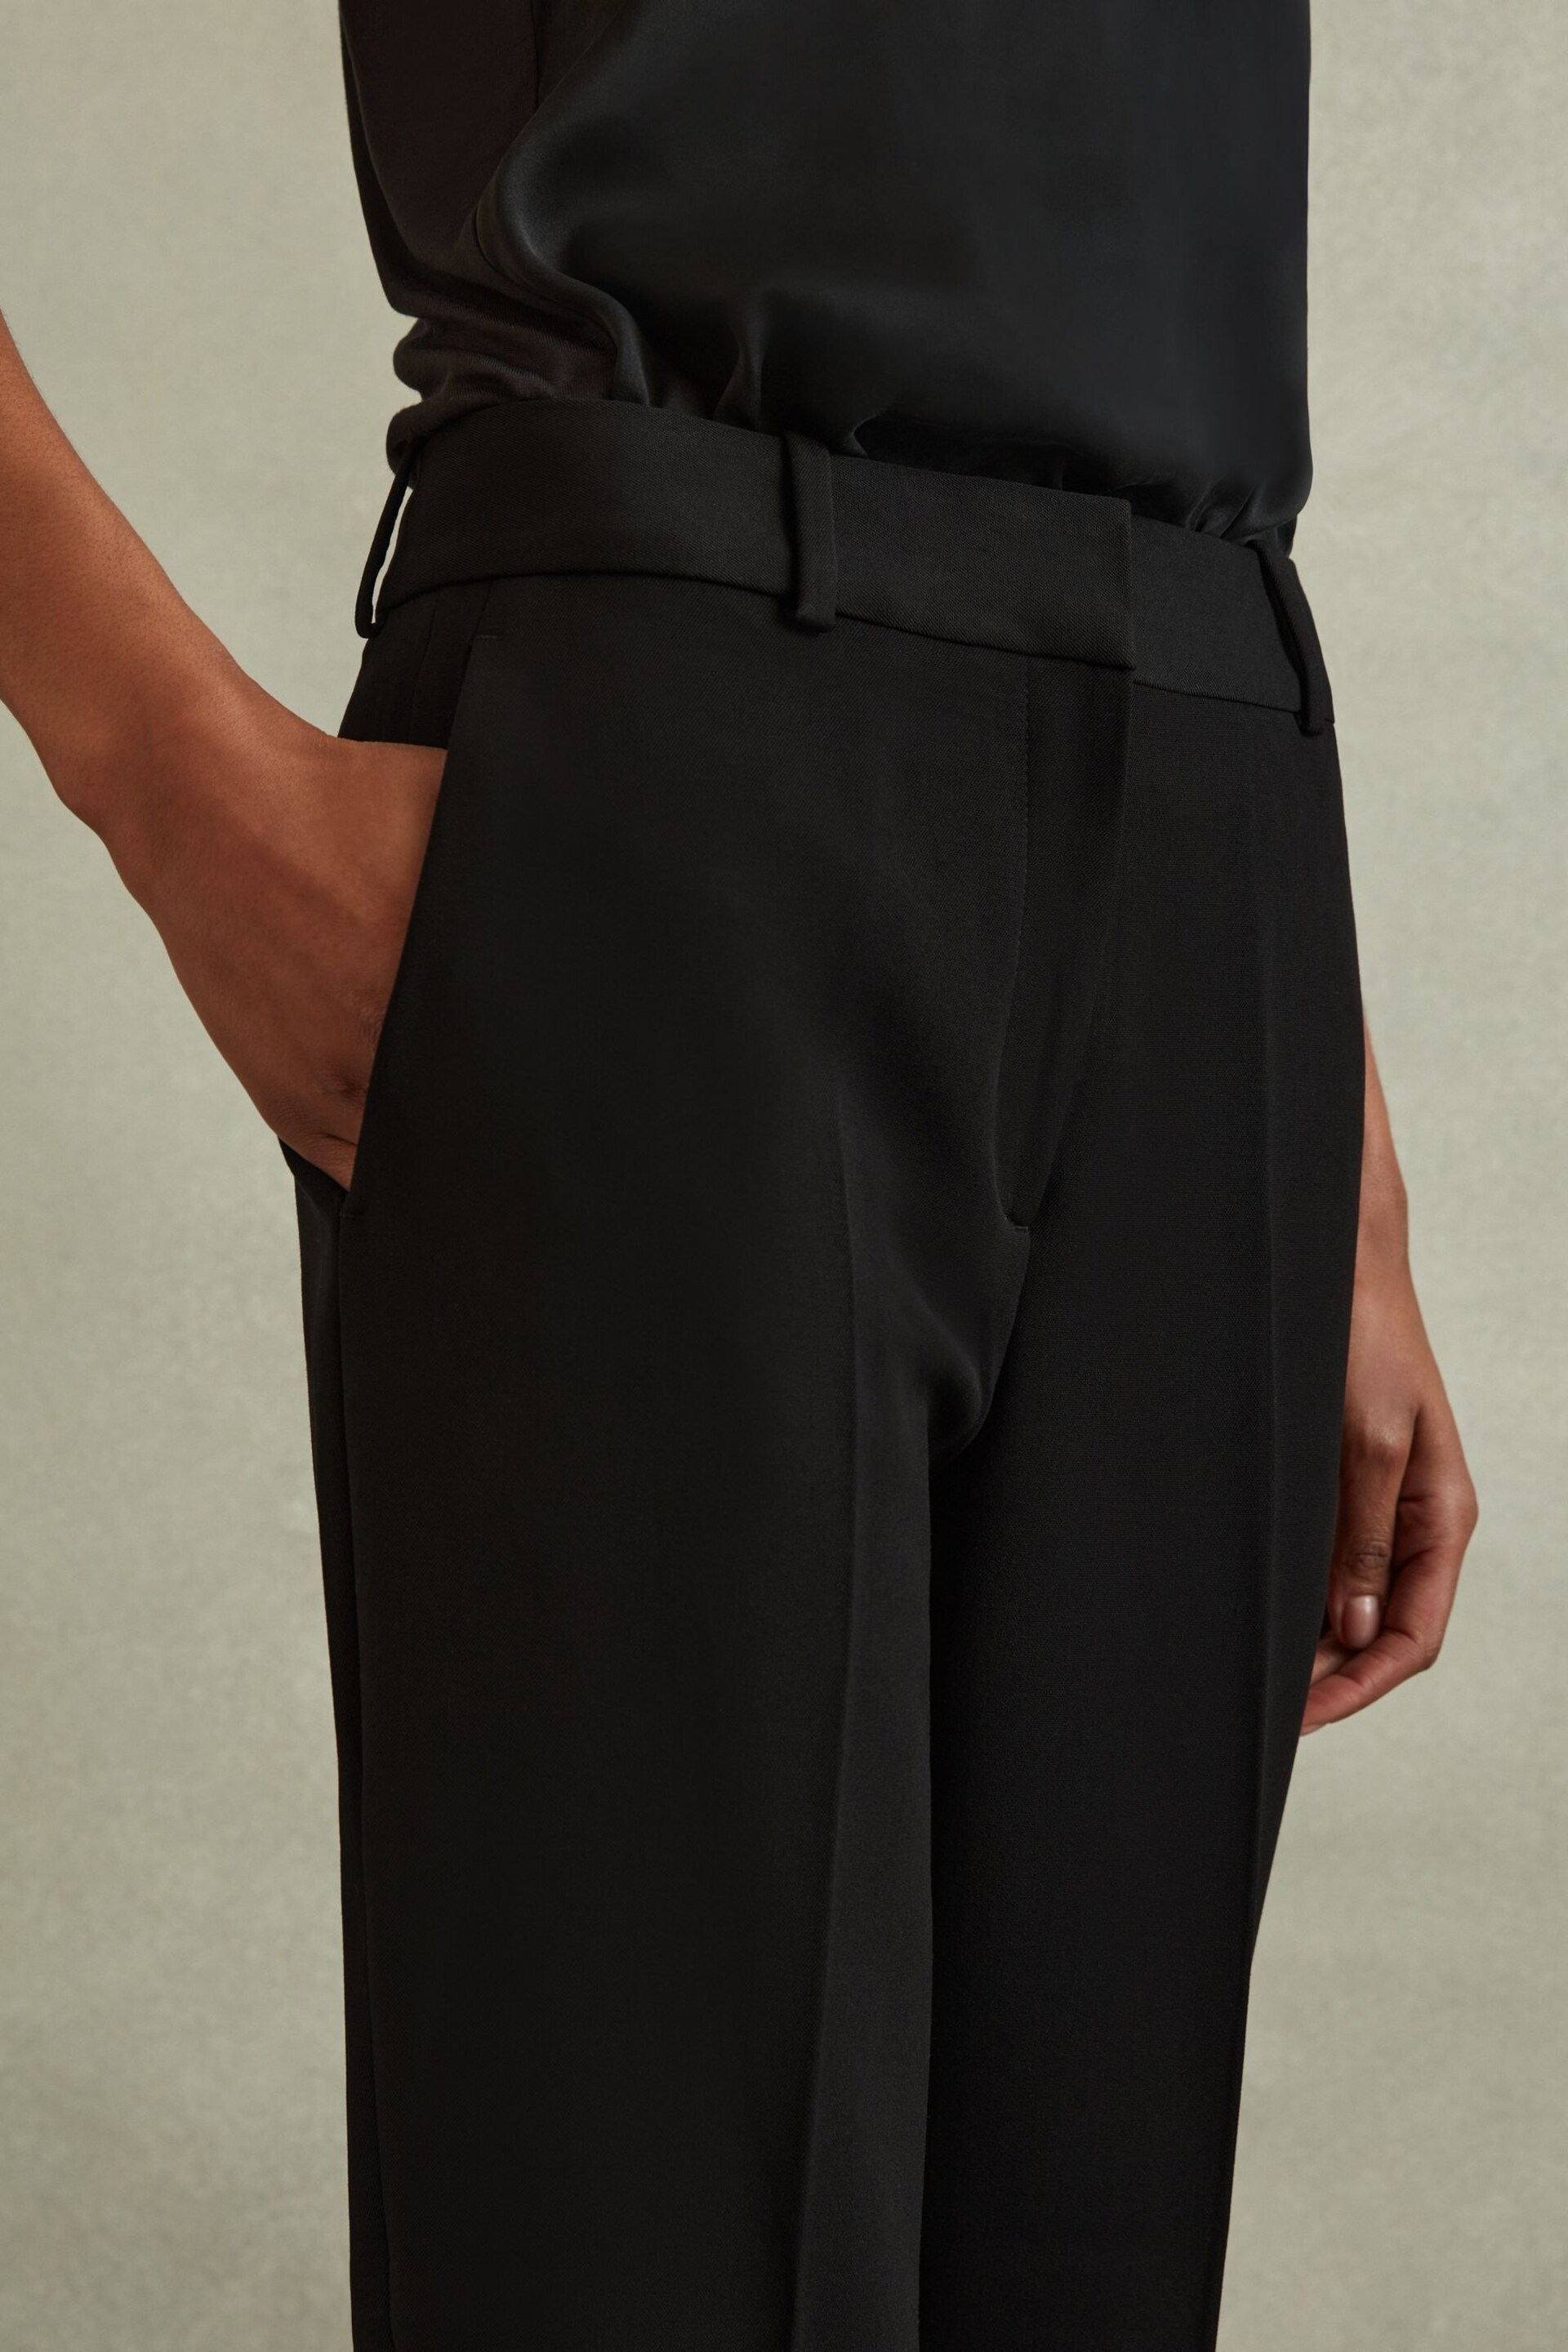 Reiss Black Gabi Slim Fit Suit Trousers - Image 3 of 6